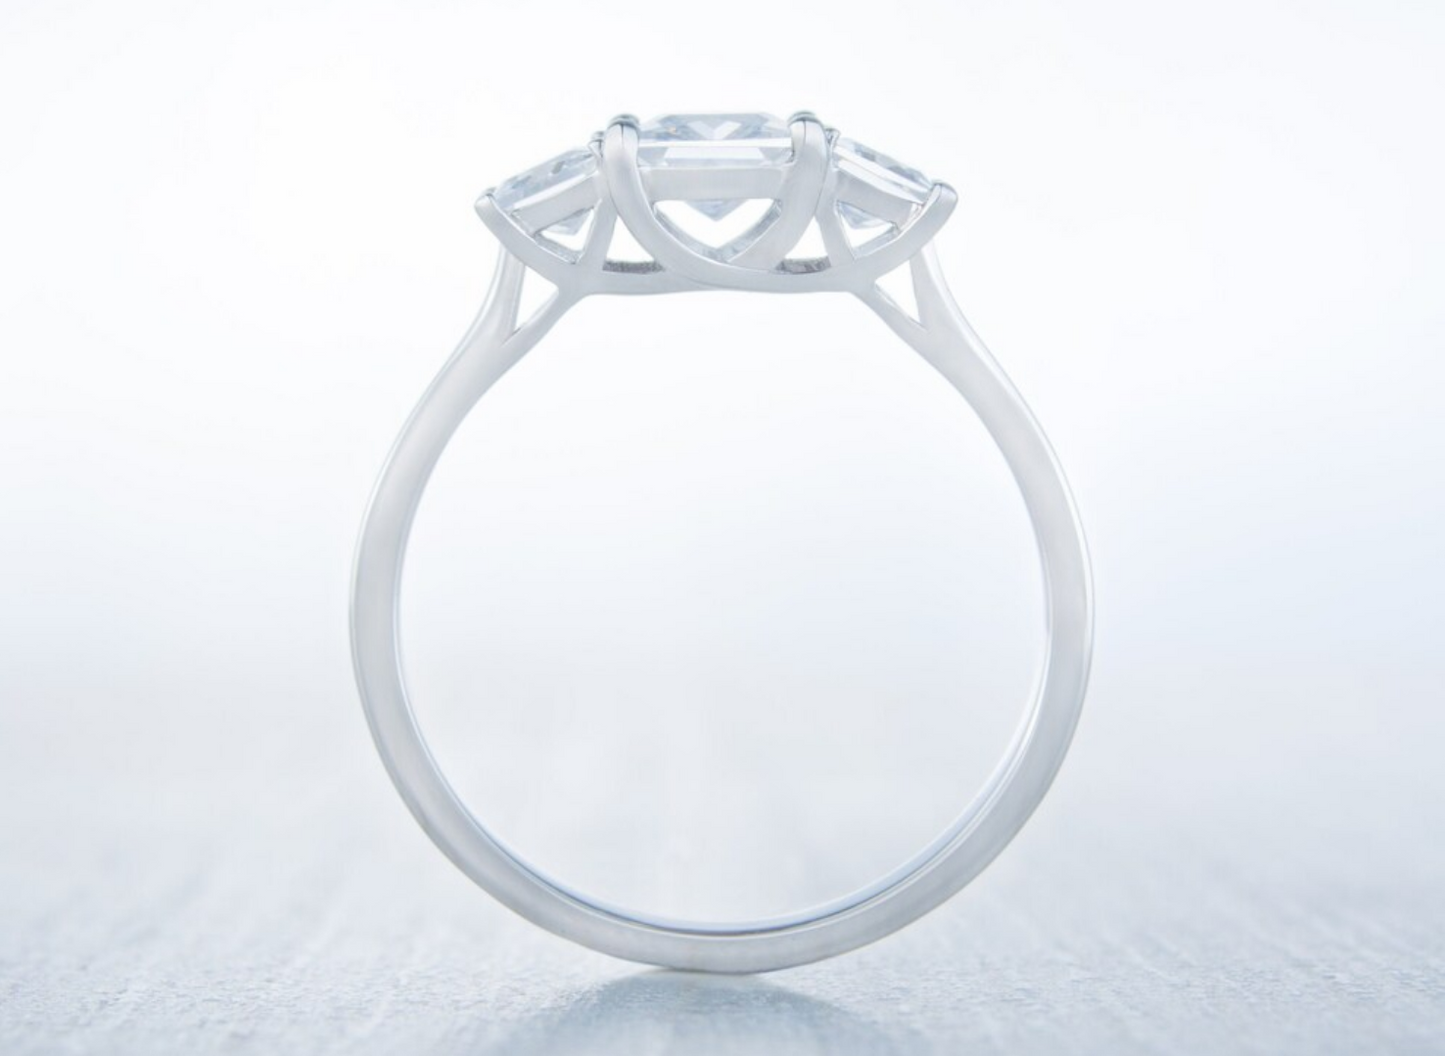 Size UK I 1/2 / US 4.5 10K Solid White Gold and Simulated Diamond Engagement ring.